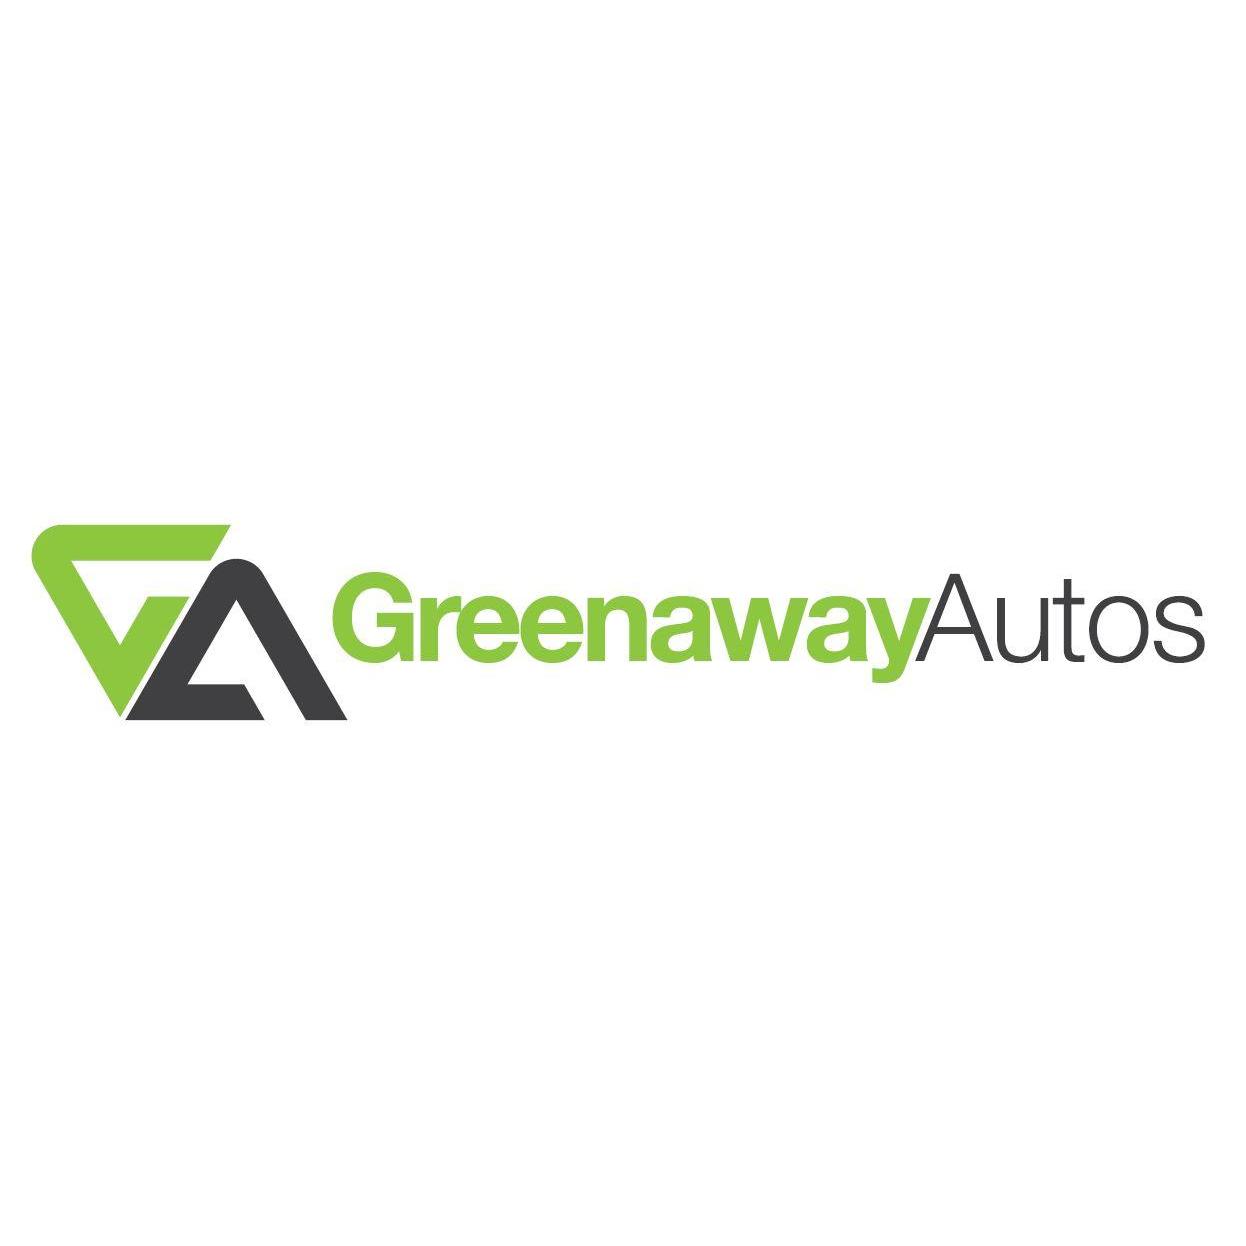 Greenaway Autos - Pontypridd, West Glamorgan CF38 1PW - 02920 226260 | ShowMeLocal.com